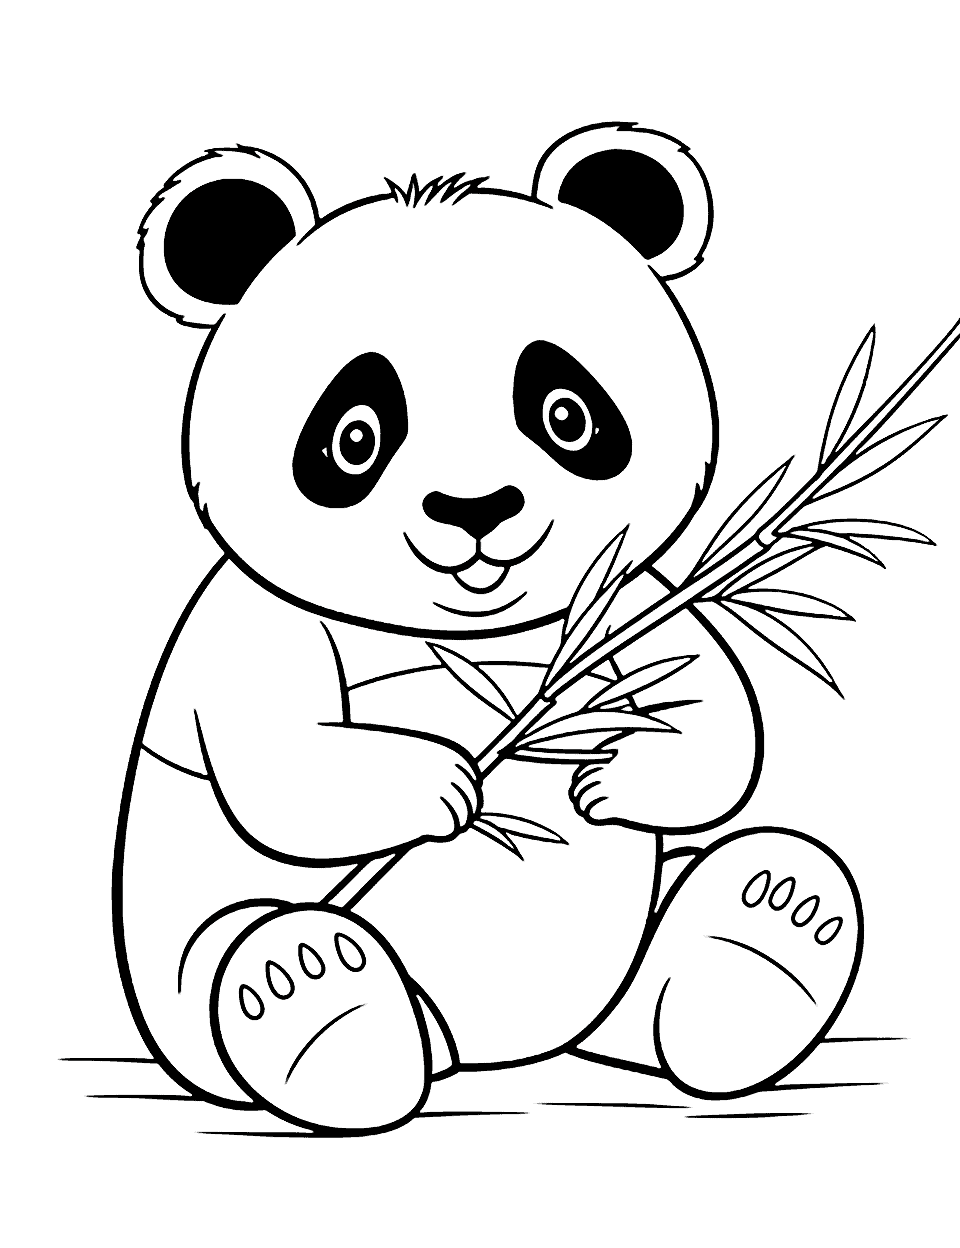 Panda Bear Eating Bamboo Animal Coloring Page - A panda bear munching on a stalk of bamboo.